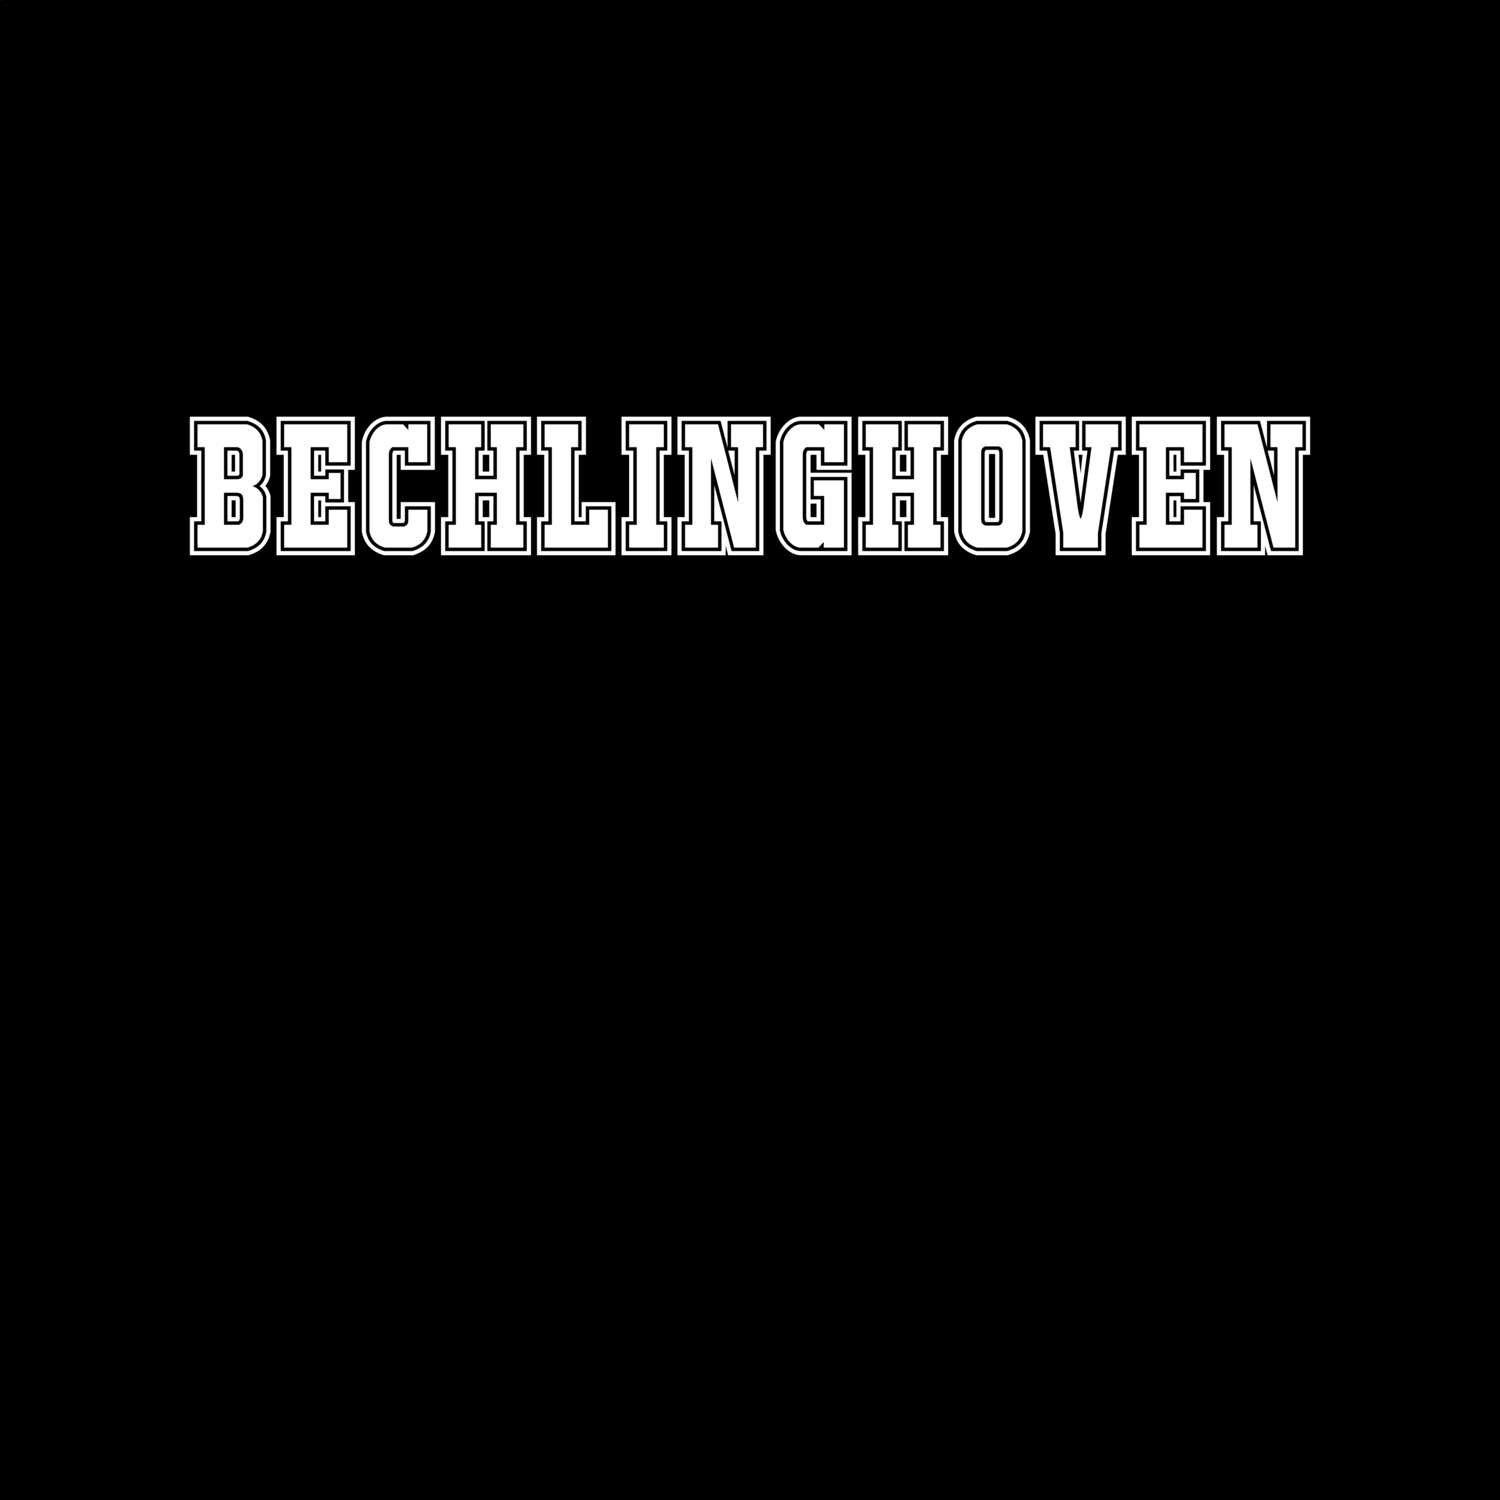 Bechlinghoven T-Shirt »Classic«